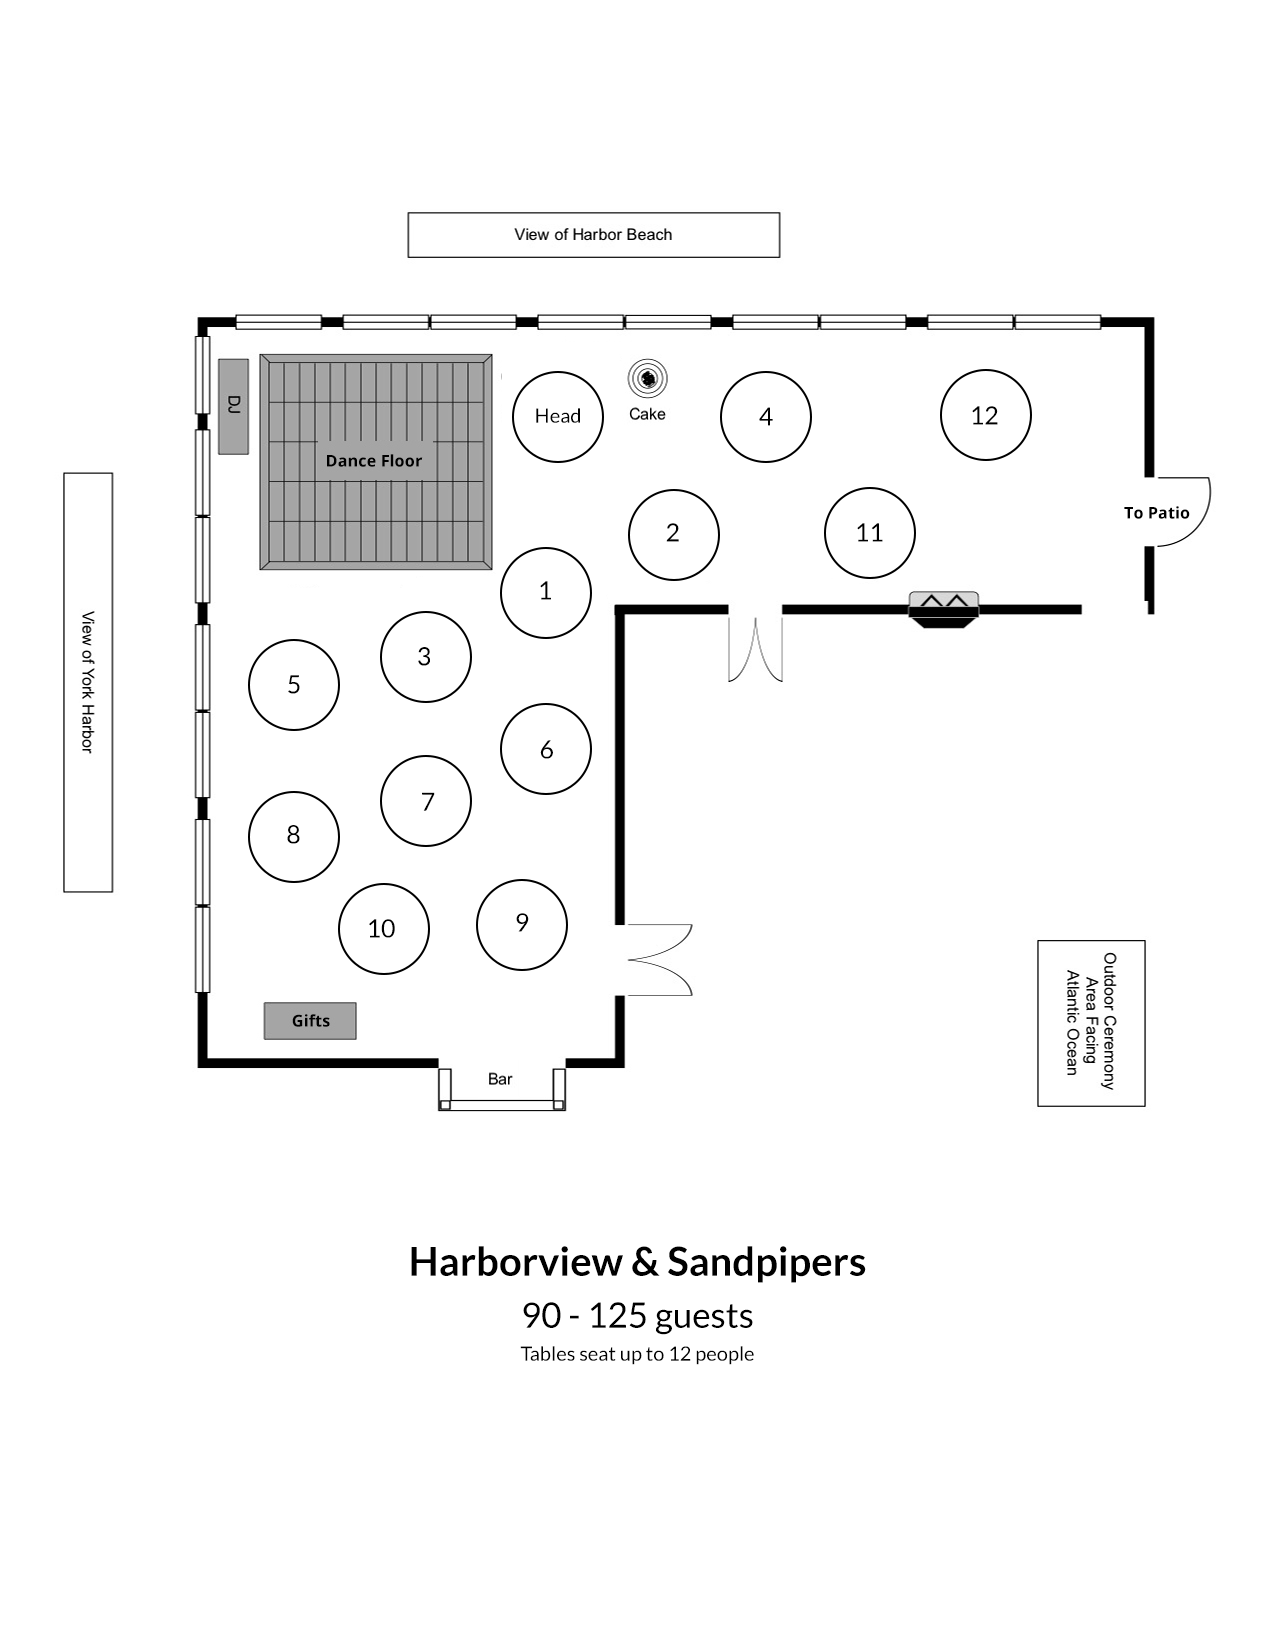 Harborview & Sandpiper Rooms